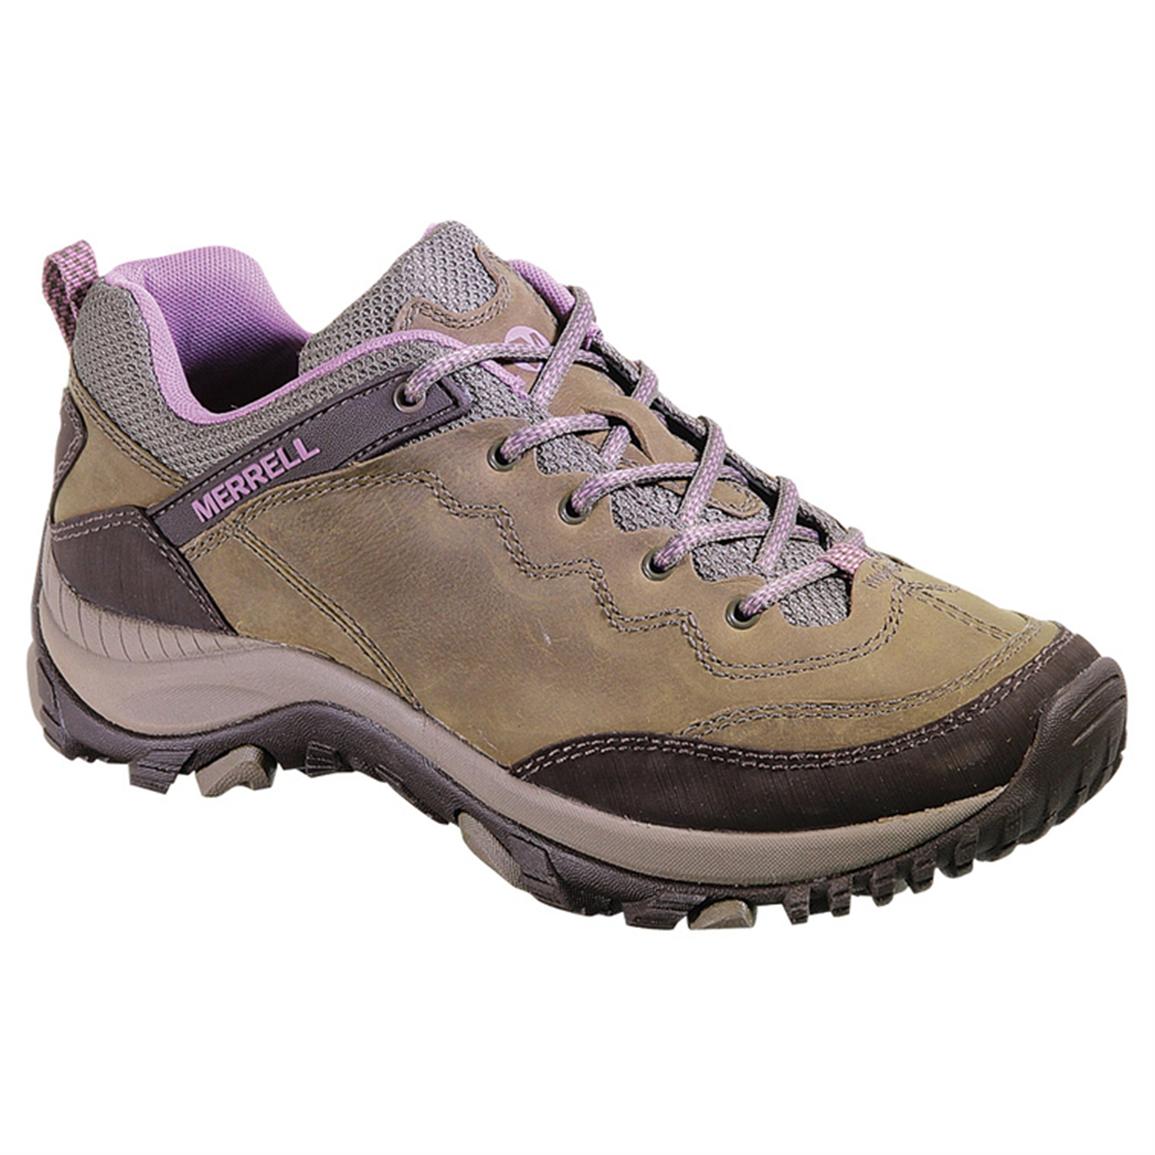 Womens Hiking Boots Clearance | semashow.com